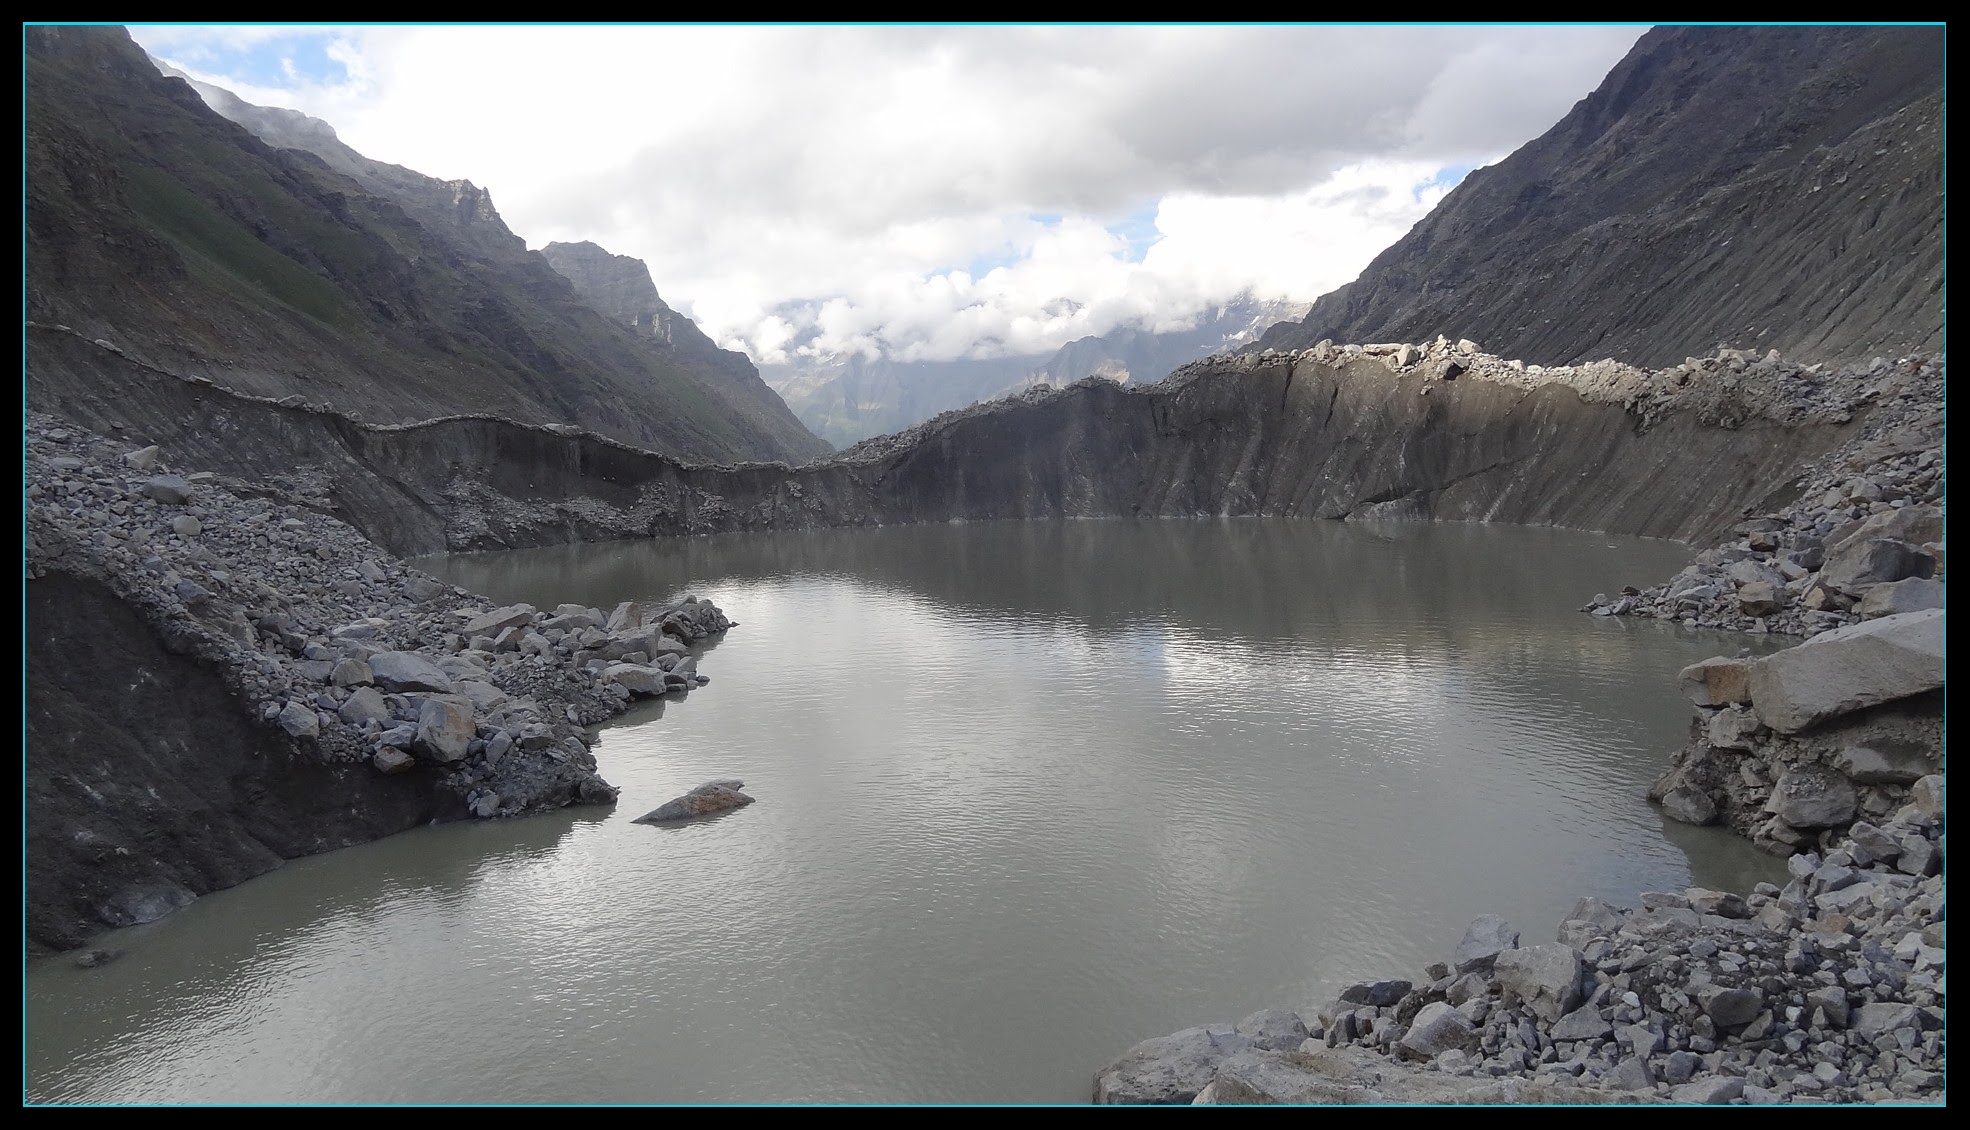 Glacial lake below Boraus pass (on Chitkul side)